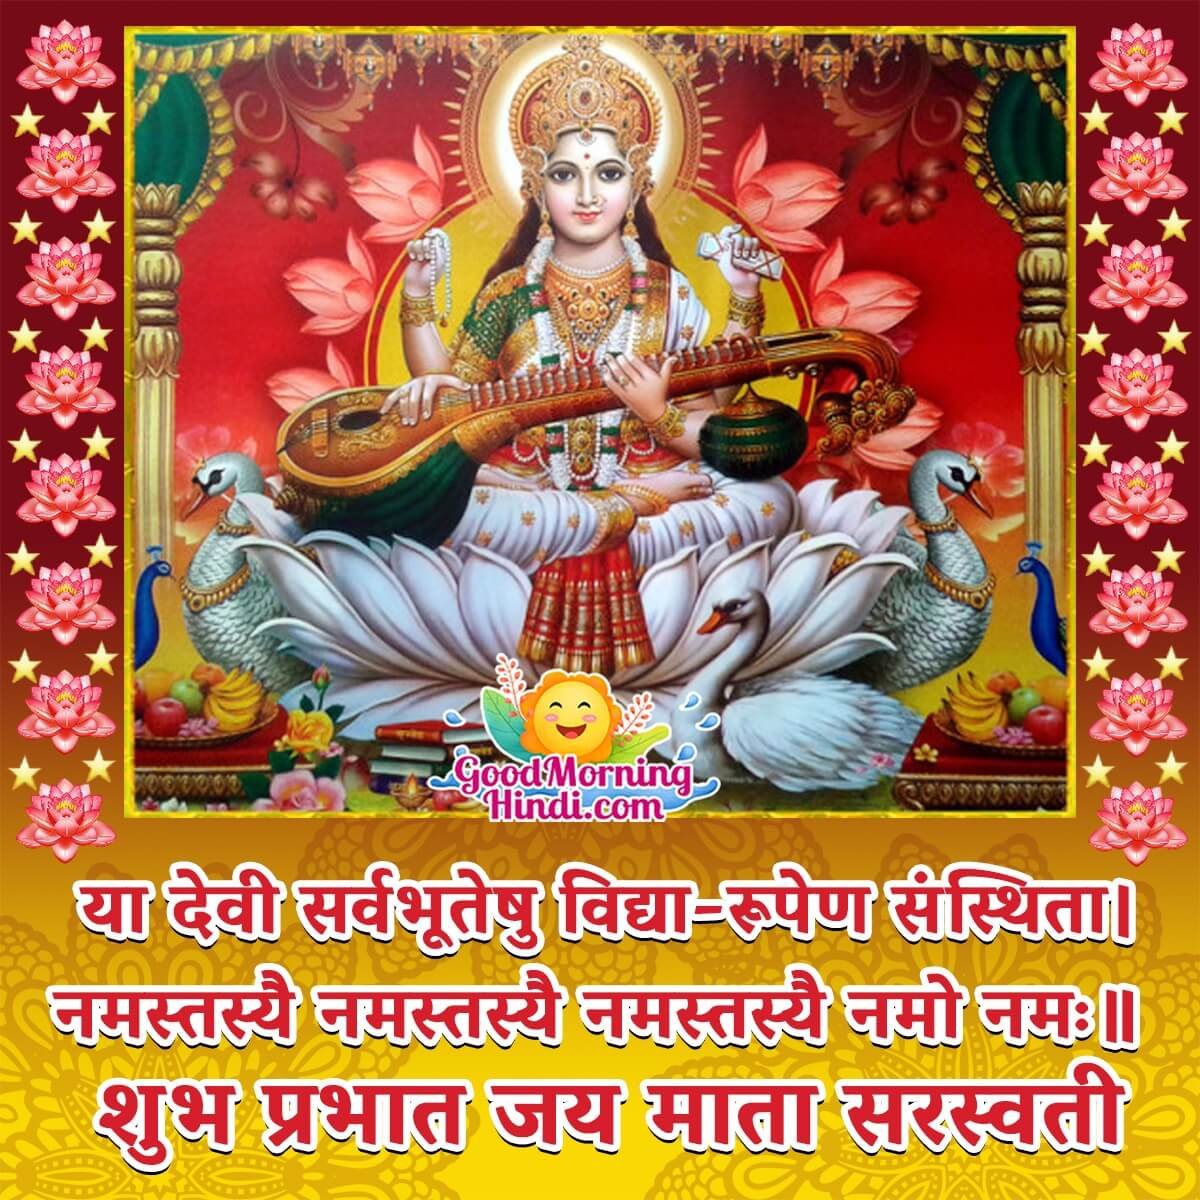 Good Morning Saraswati Devi Images In Hindi - Good Morning Wishes ...